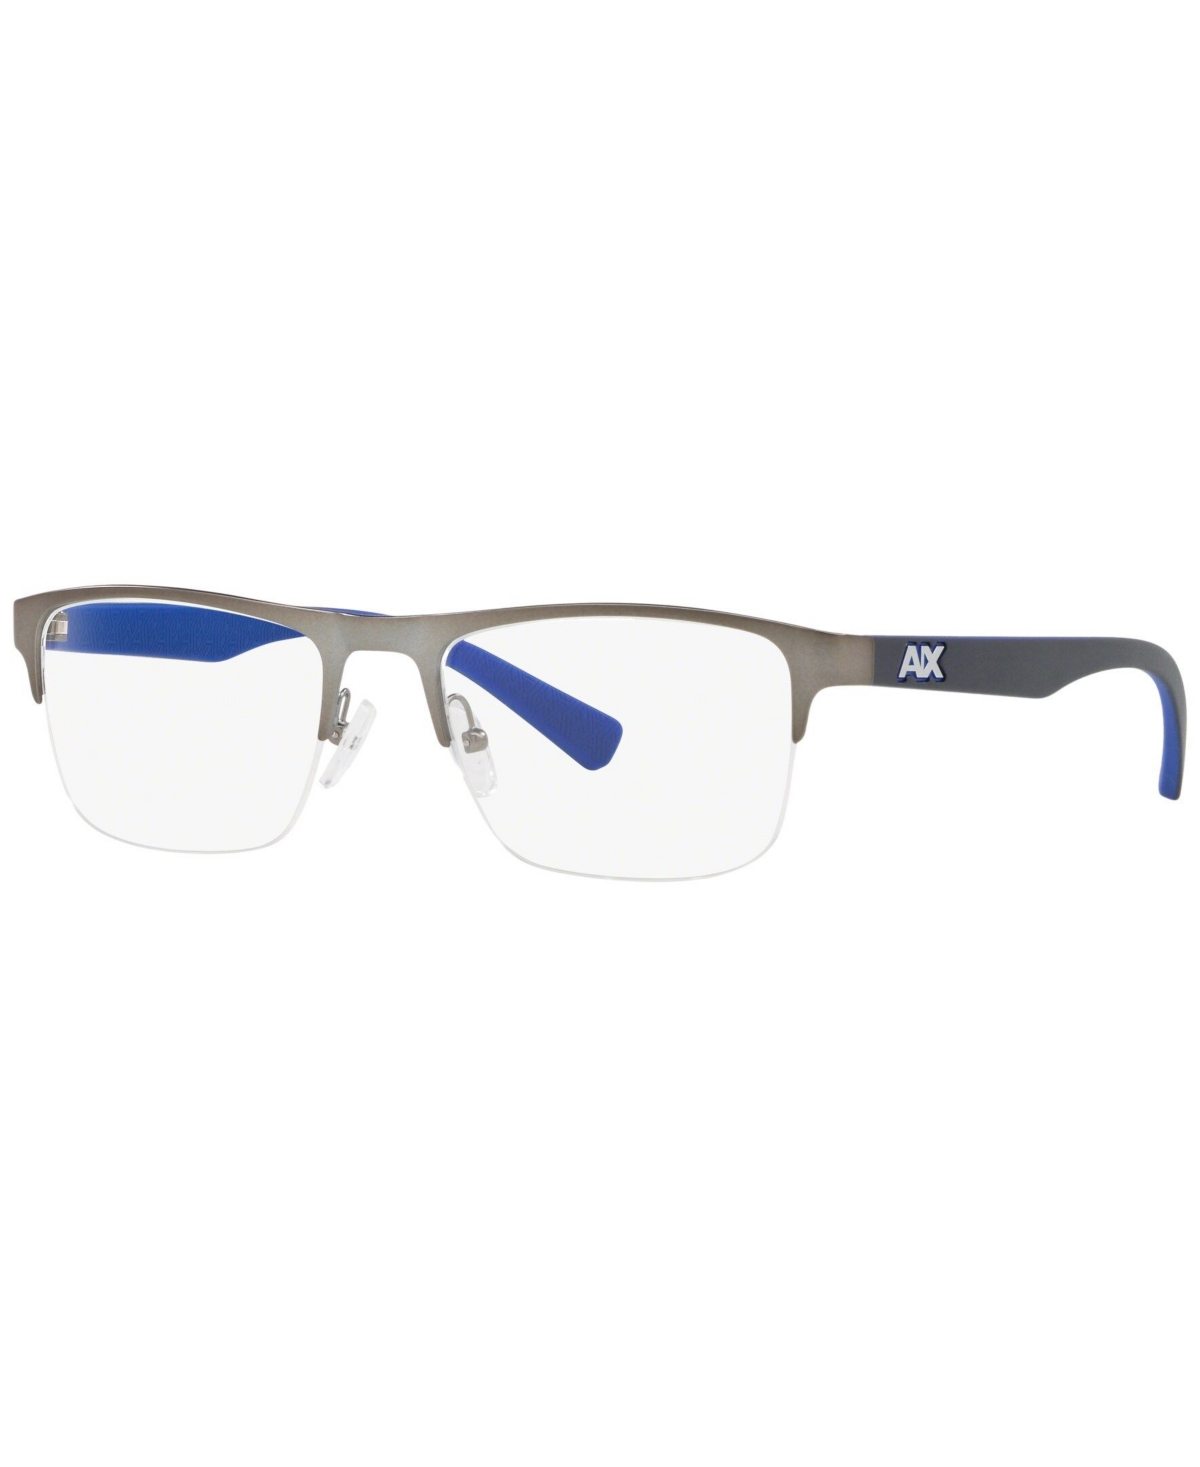 EAN 8053672885071 product image for Armani Exchange AX1031 Men's Rectangle Eyeglasses | upcitemdb.com